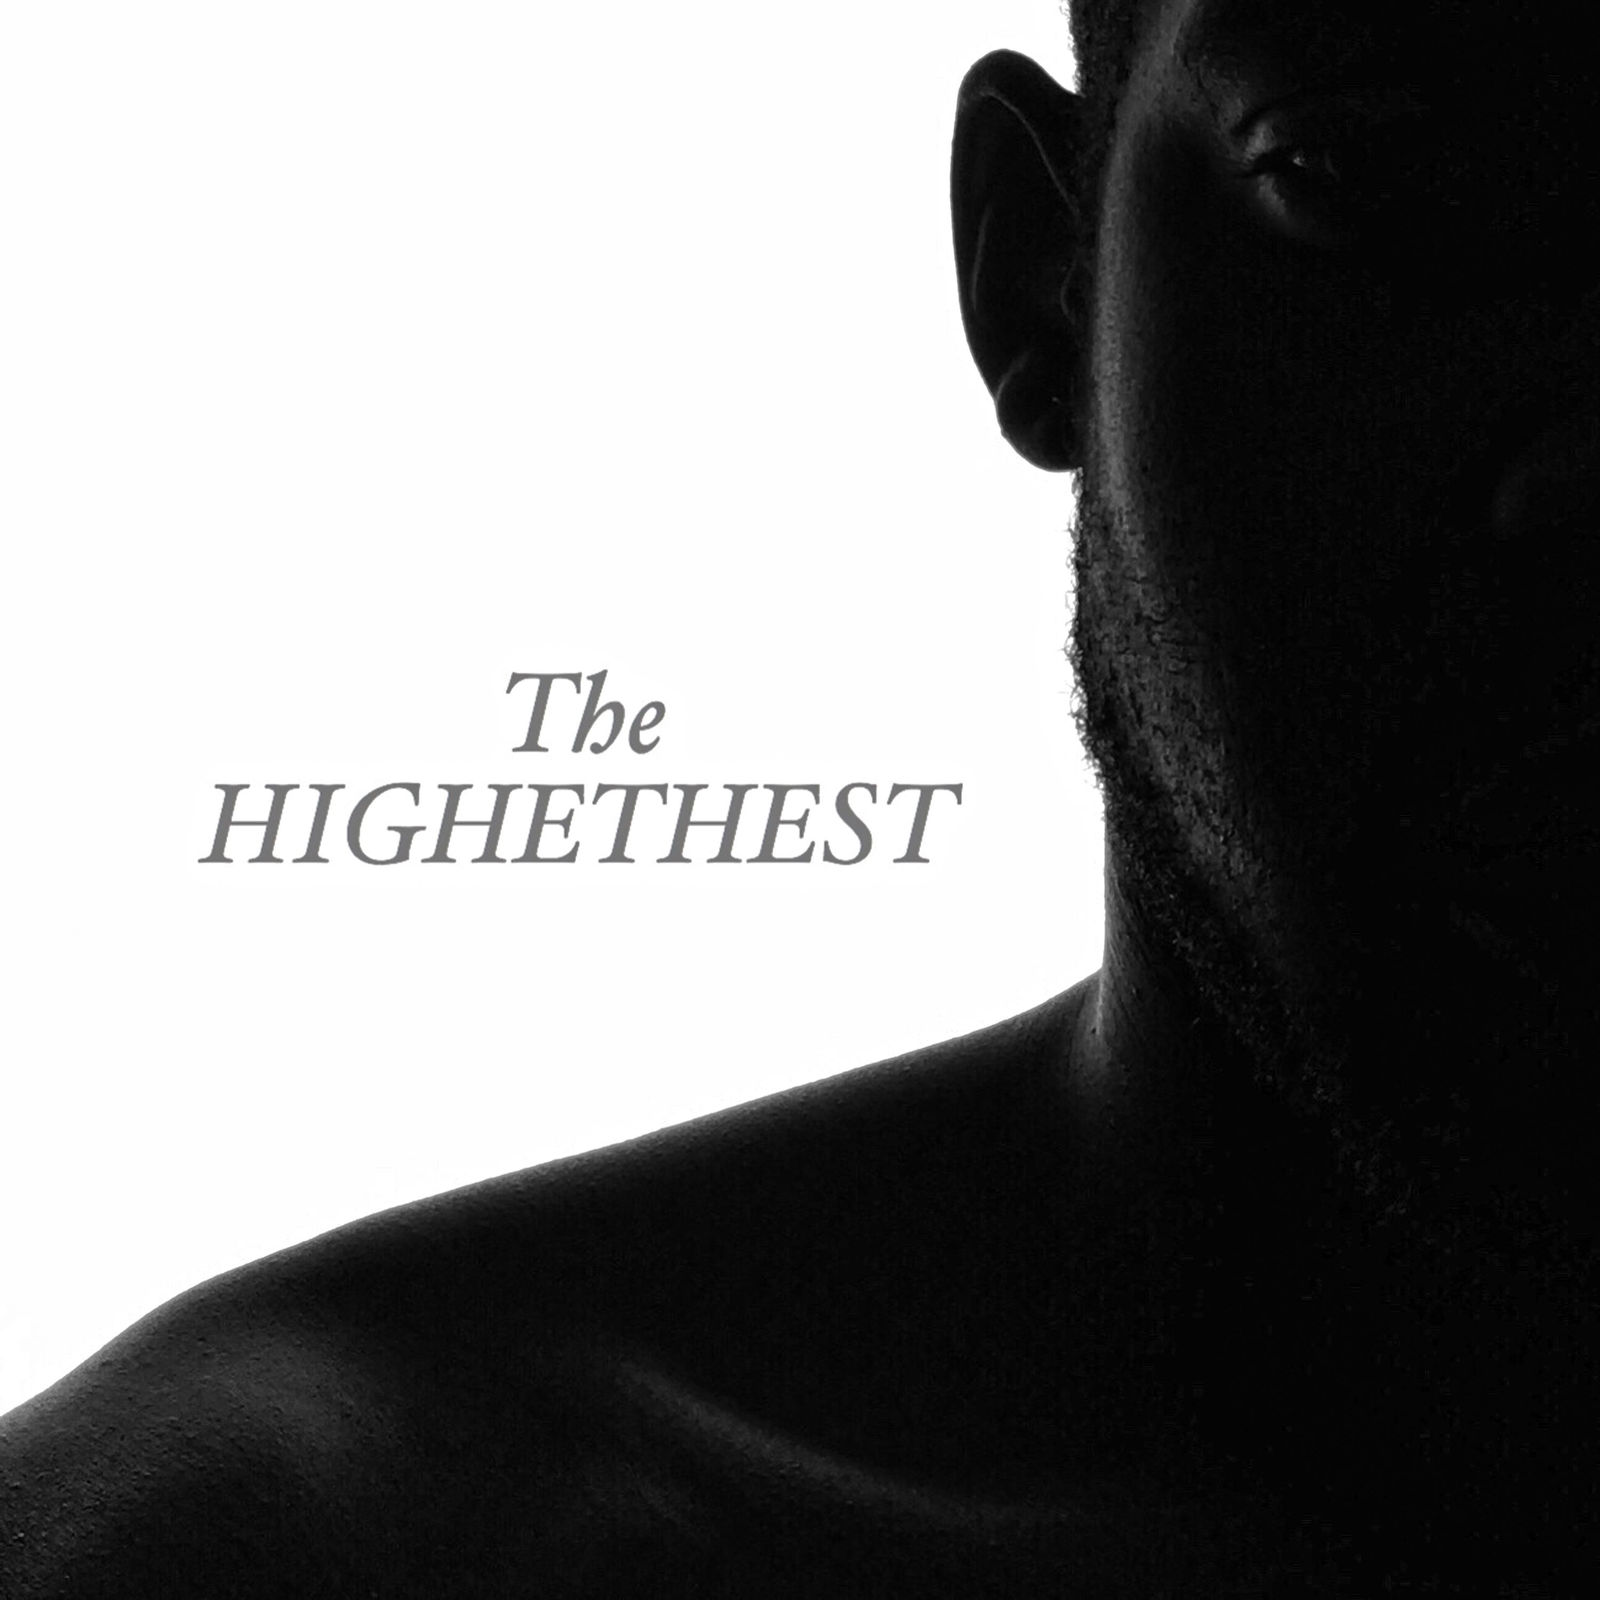 The Highethest